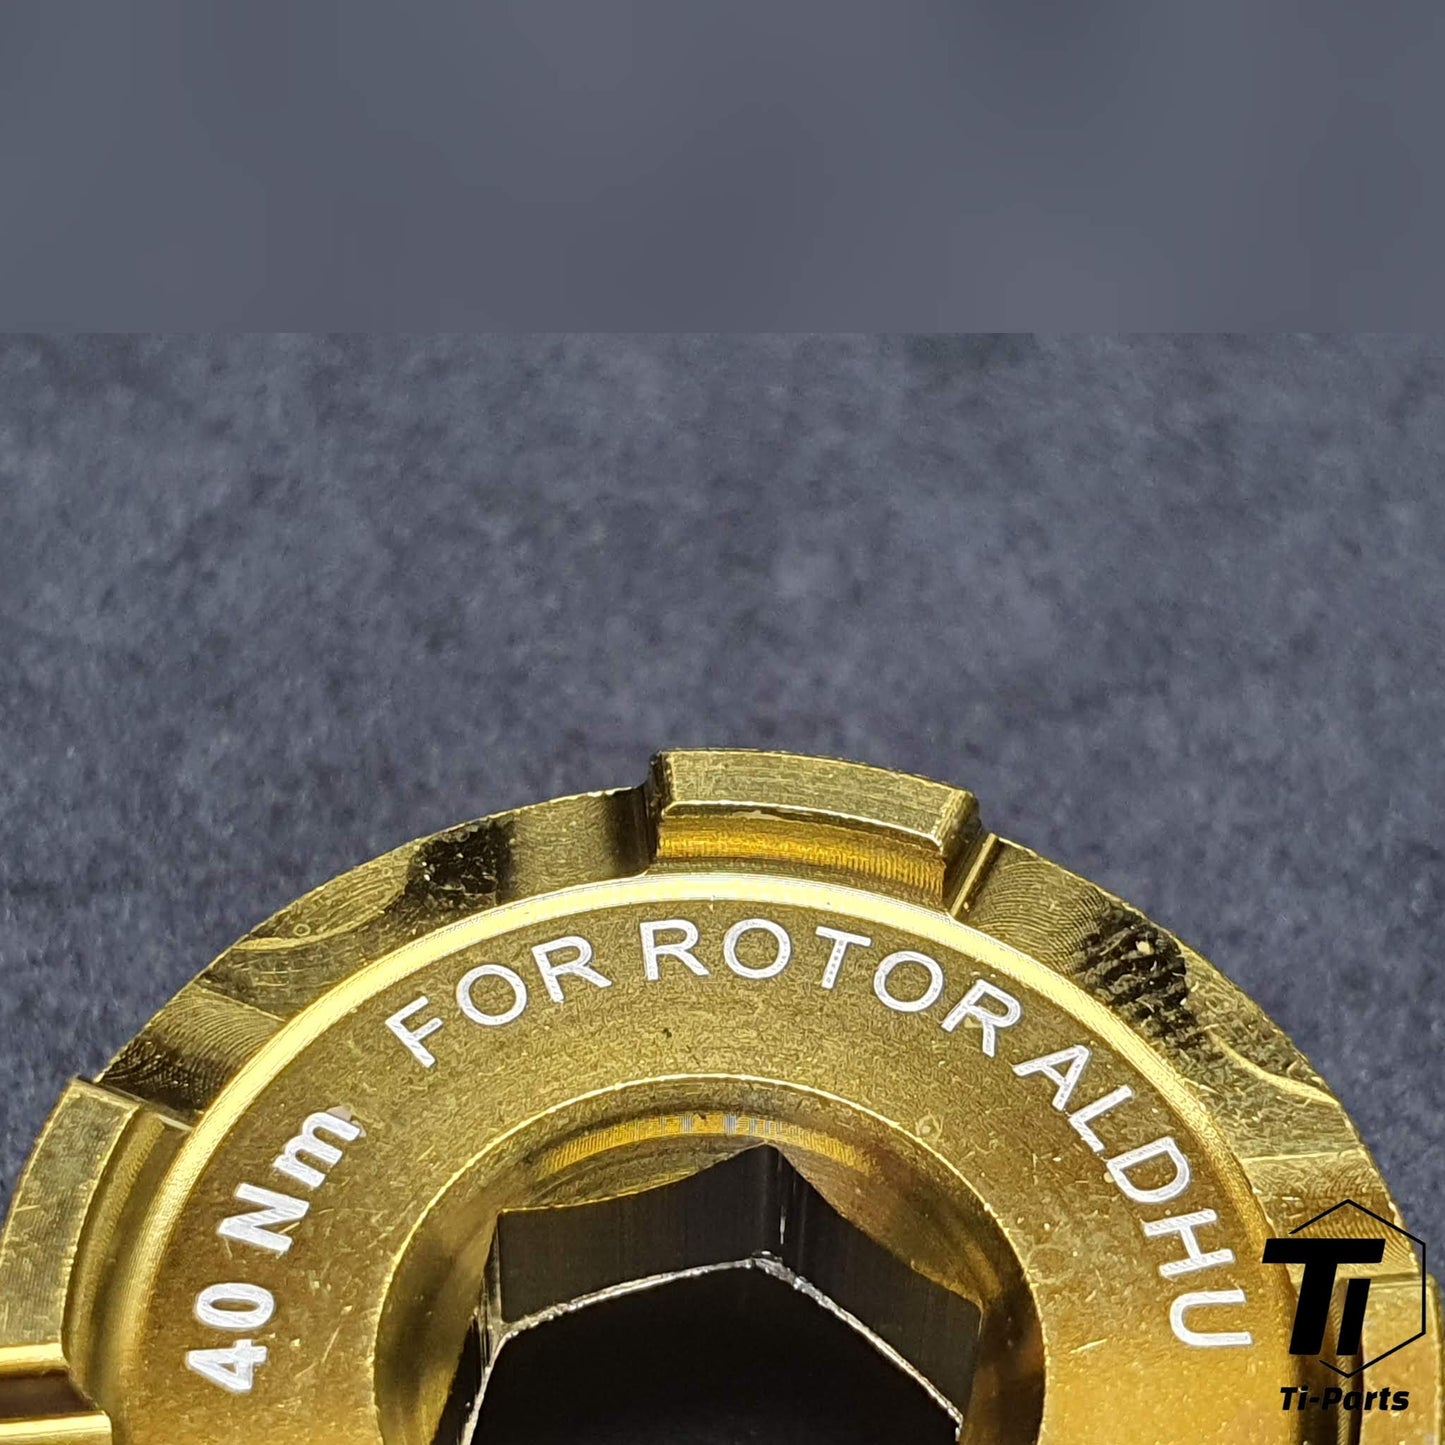 Rotor Aldhu 3D+ ฝาครอบข้อเหวี่ยงไทเทเนียม | ขาจาน Carbon Spider น็อตแอโร Q Ring Power2max | สกรูไทเทเนียม